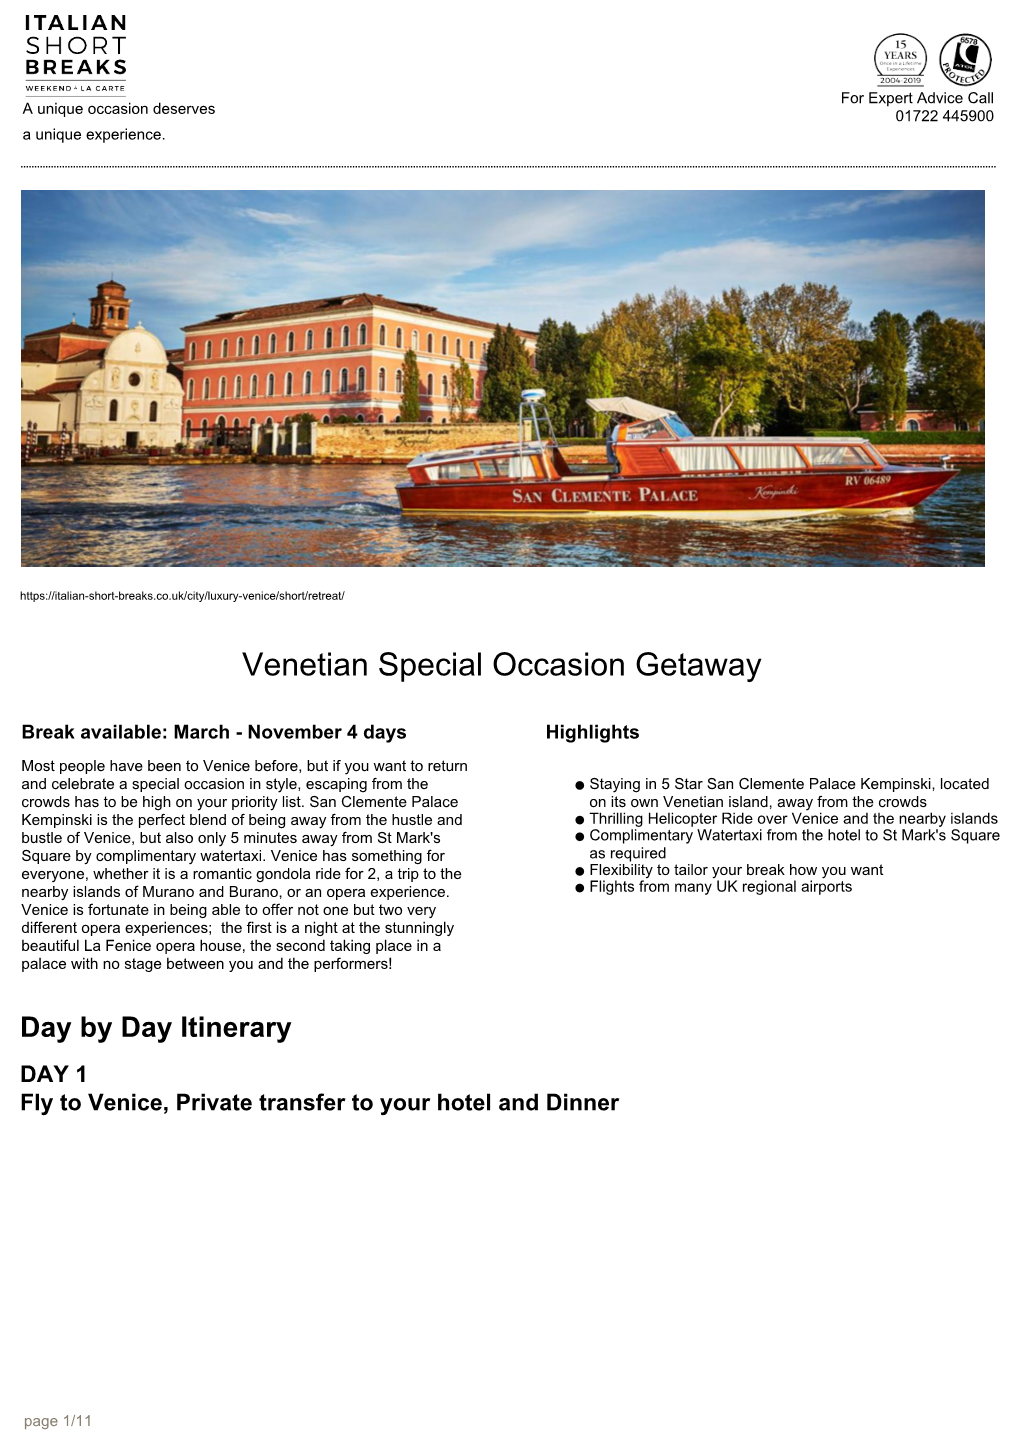 Venetian Special Occasion Getaway